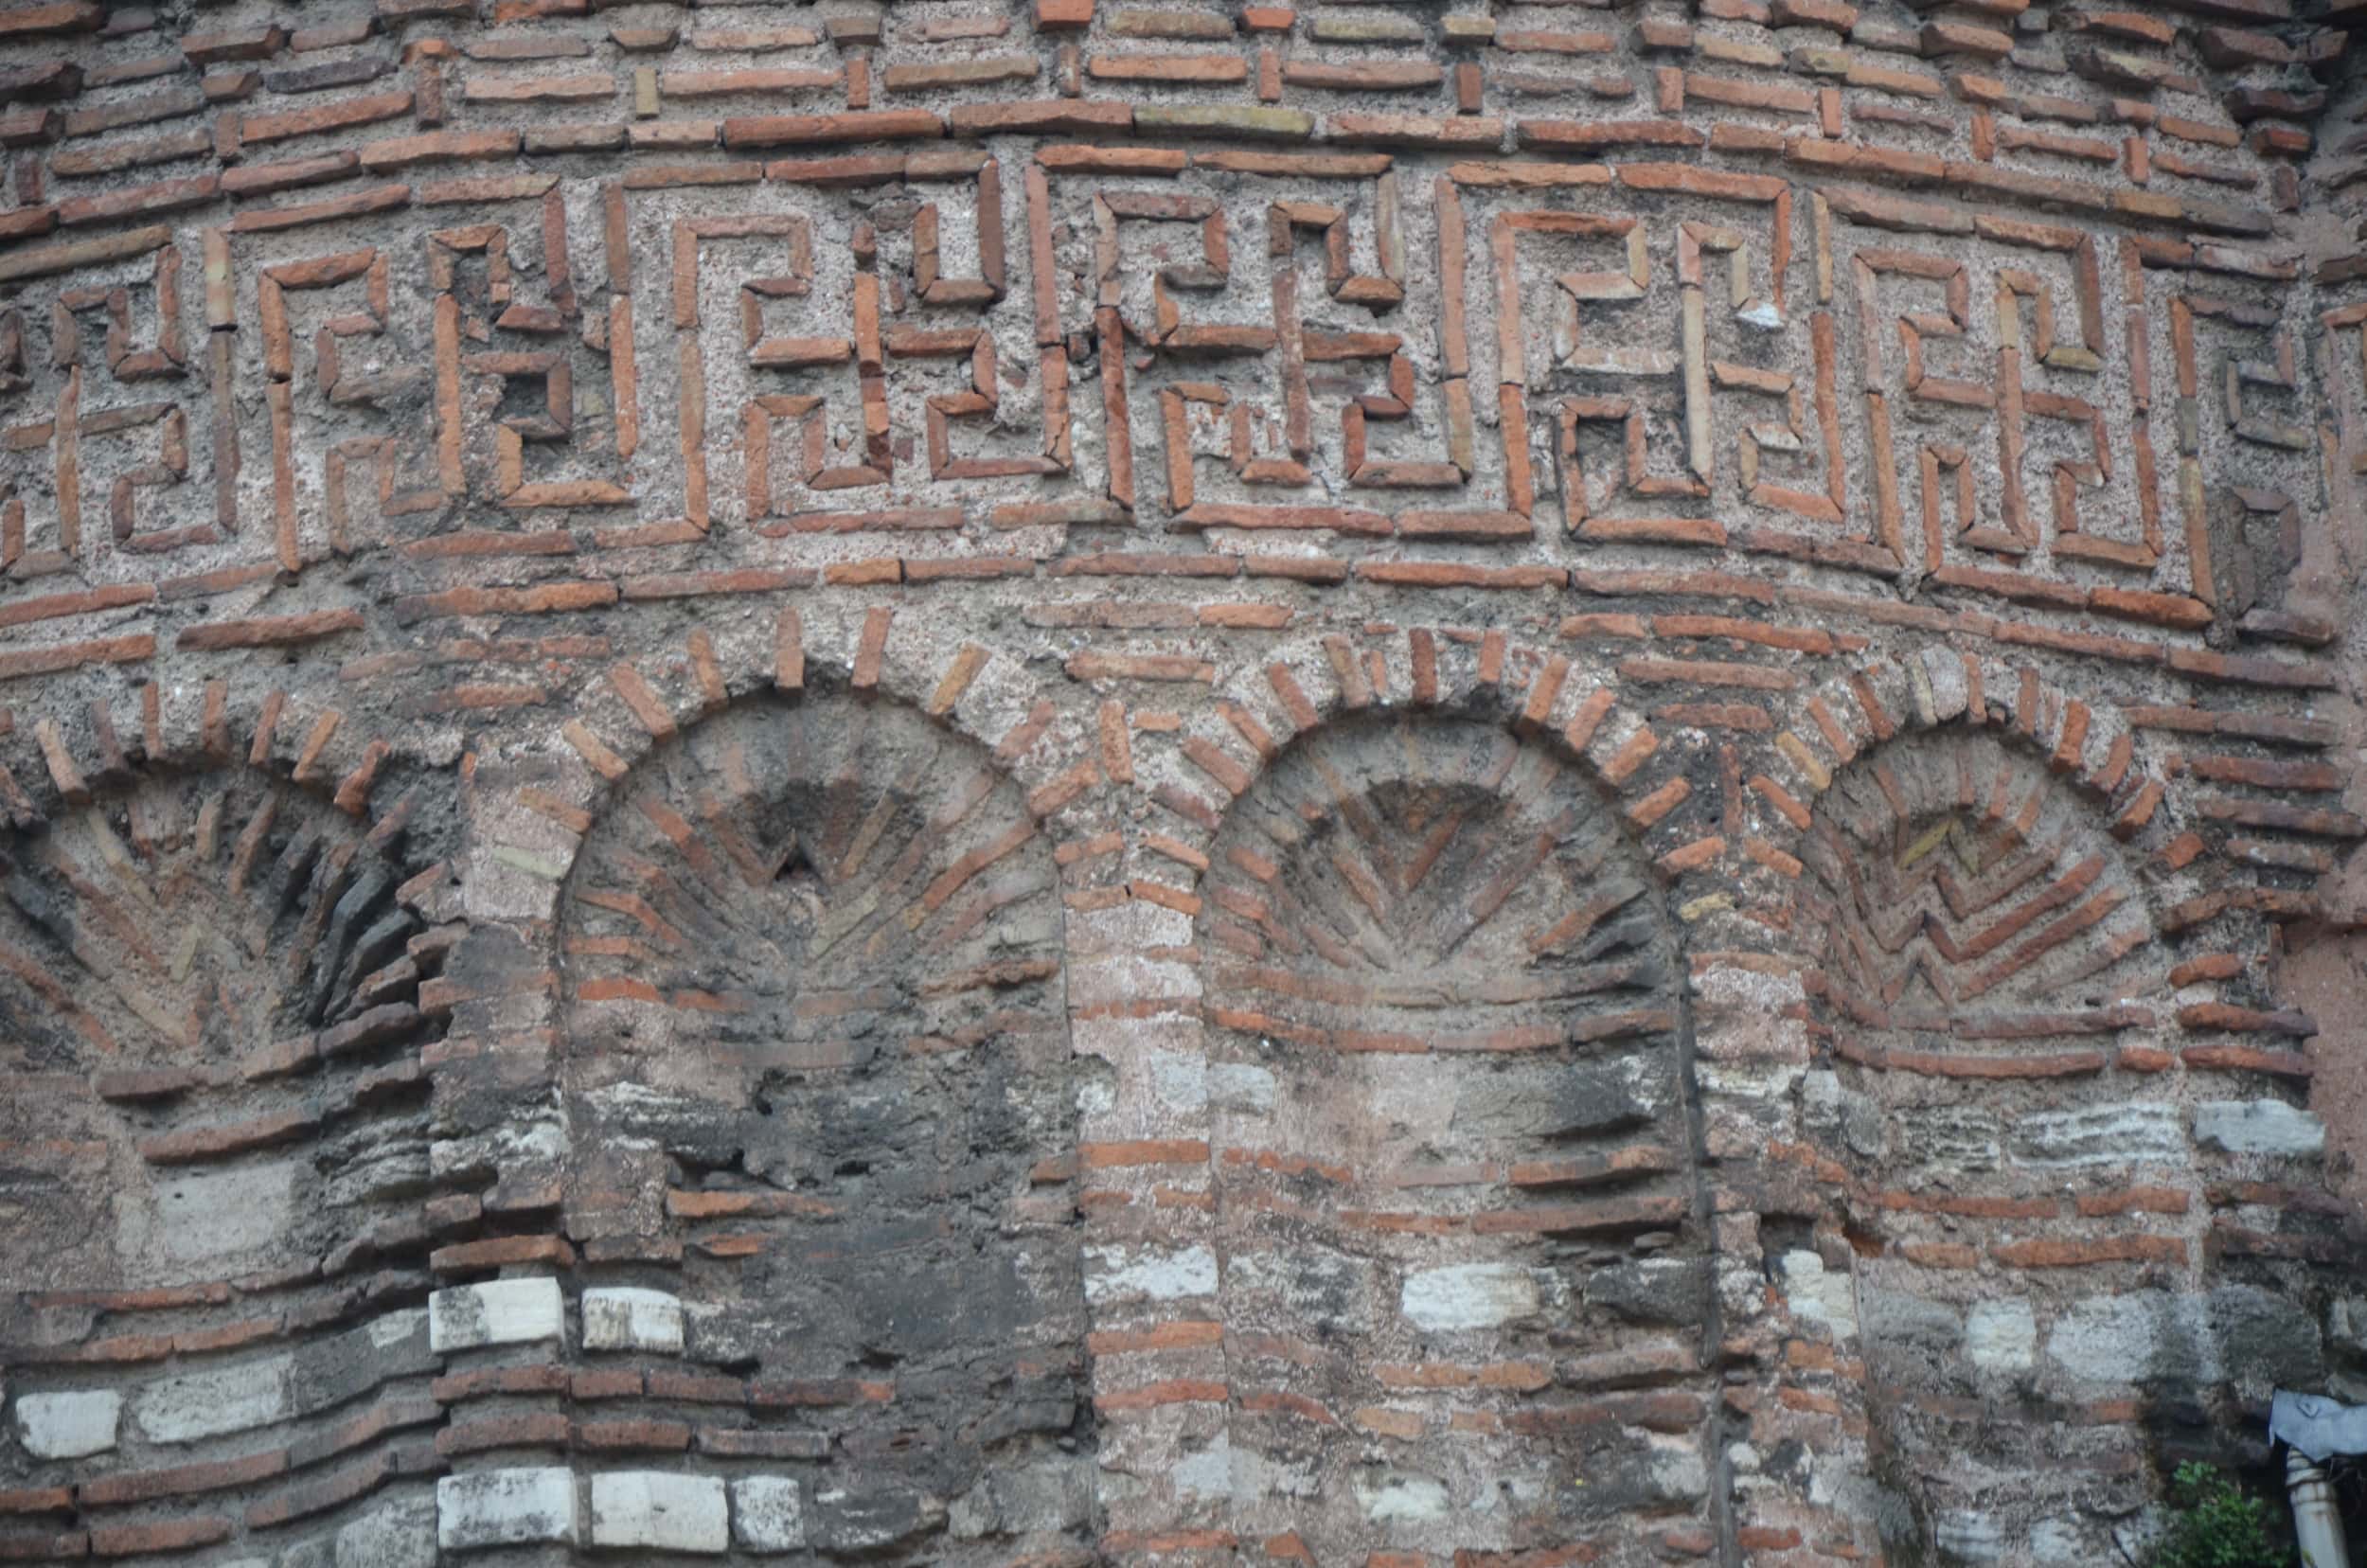 Brickwork at the Molla Fenari Isa Mosque in Istanbul, Turkey